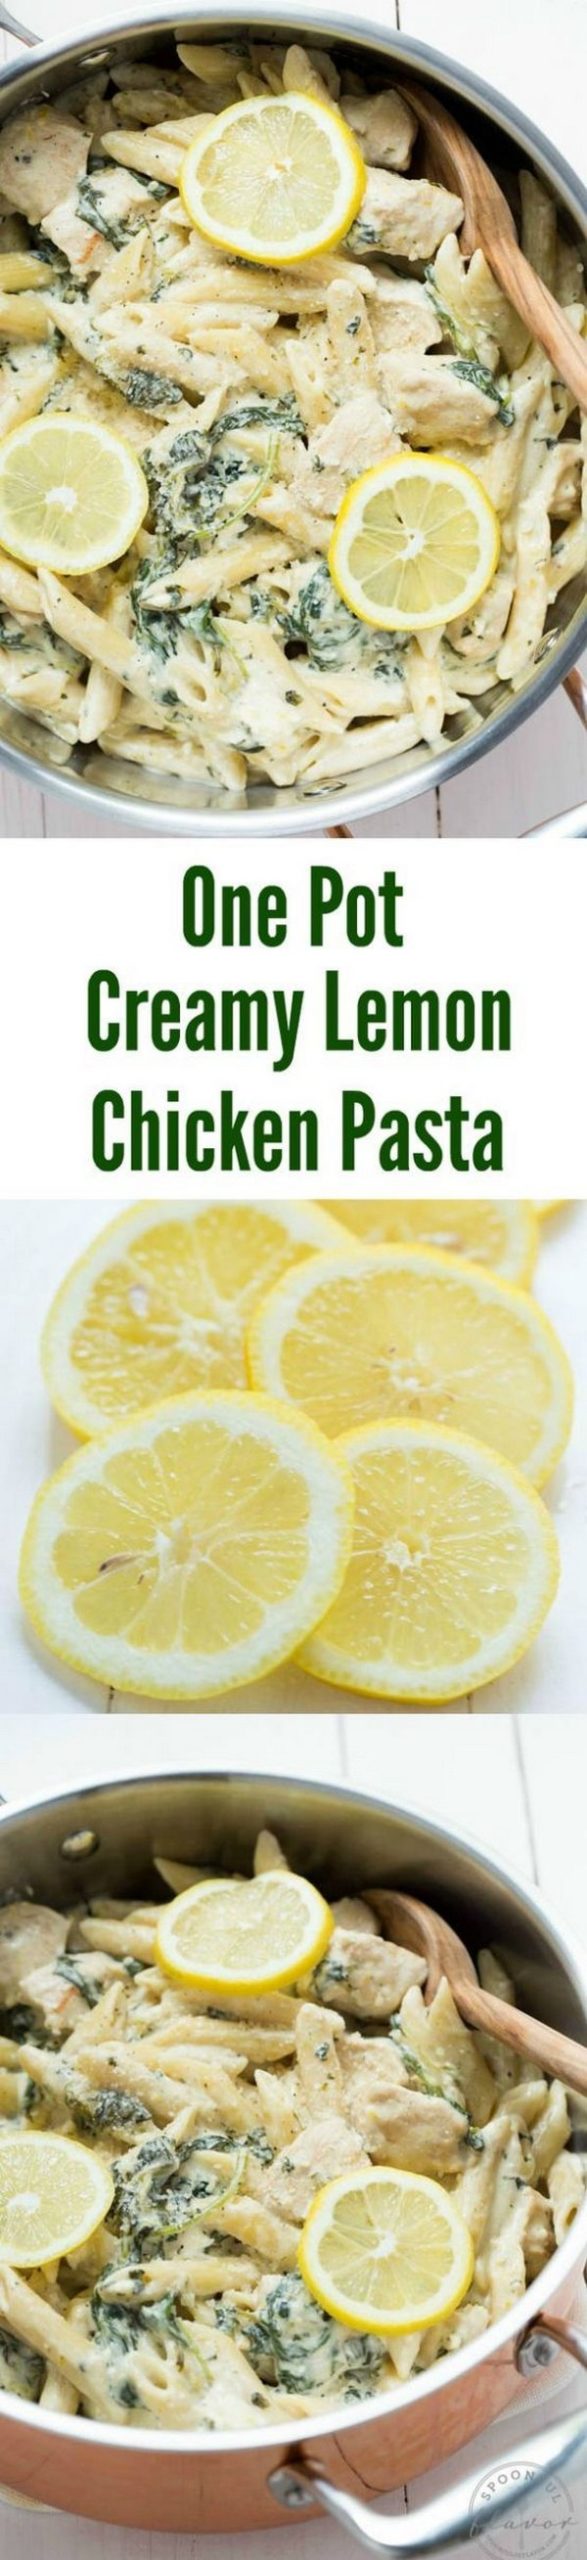 One Pot Creamy Lemon Chicken Pasta With Baby Kale